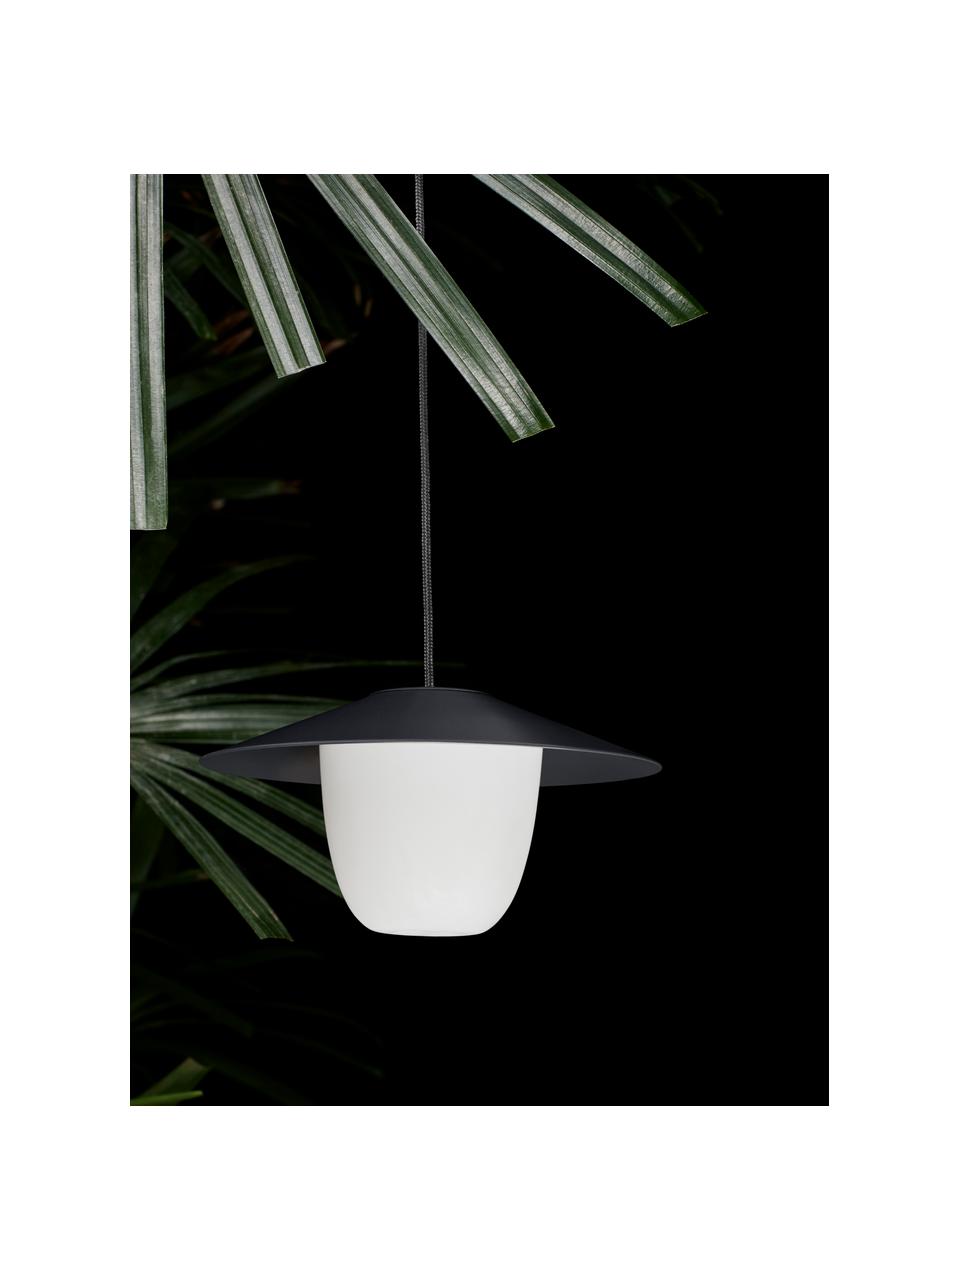 Mobiele dimbare LED outdoor lamp Ani om op te hangen of te zetten, Lampenkap: aluminium, Lampvoet: gecoat aluminium, Zwart, wit, Ø 22 x H 33 cm